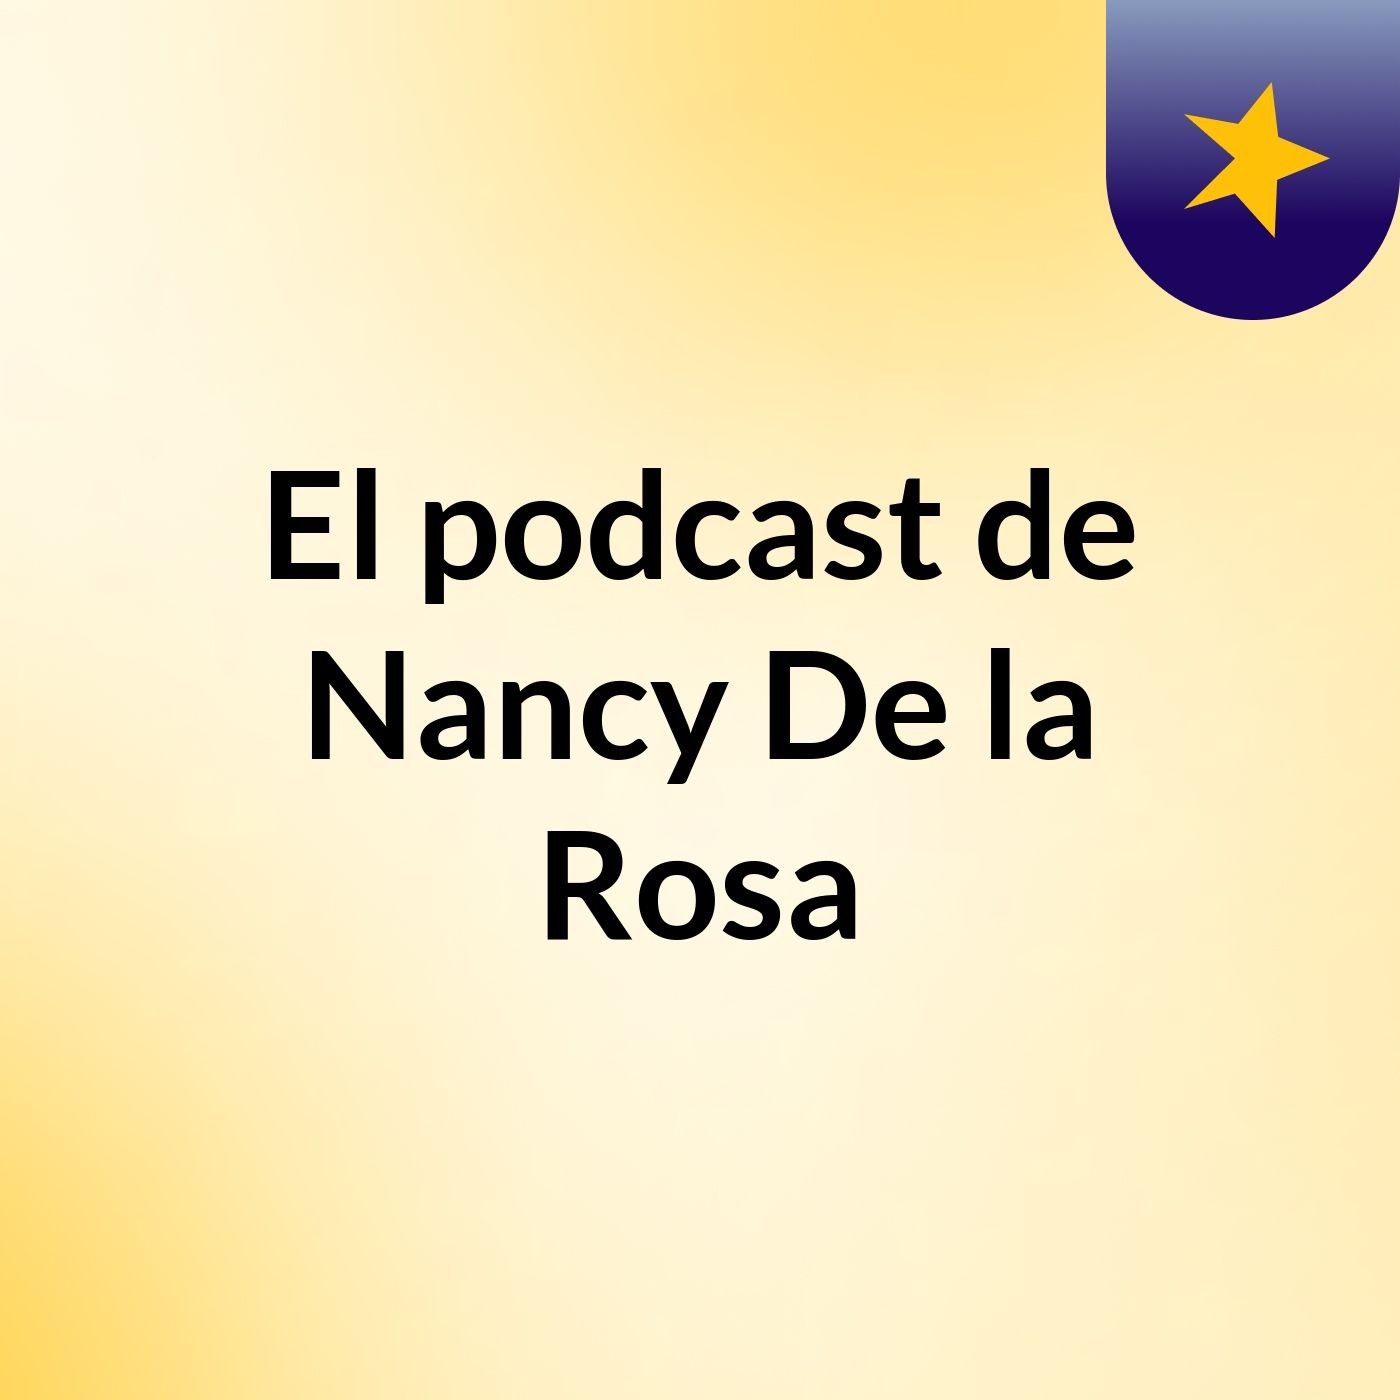 Episodio 4 - El podcast de Nancy De la Rosa